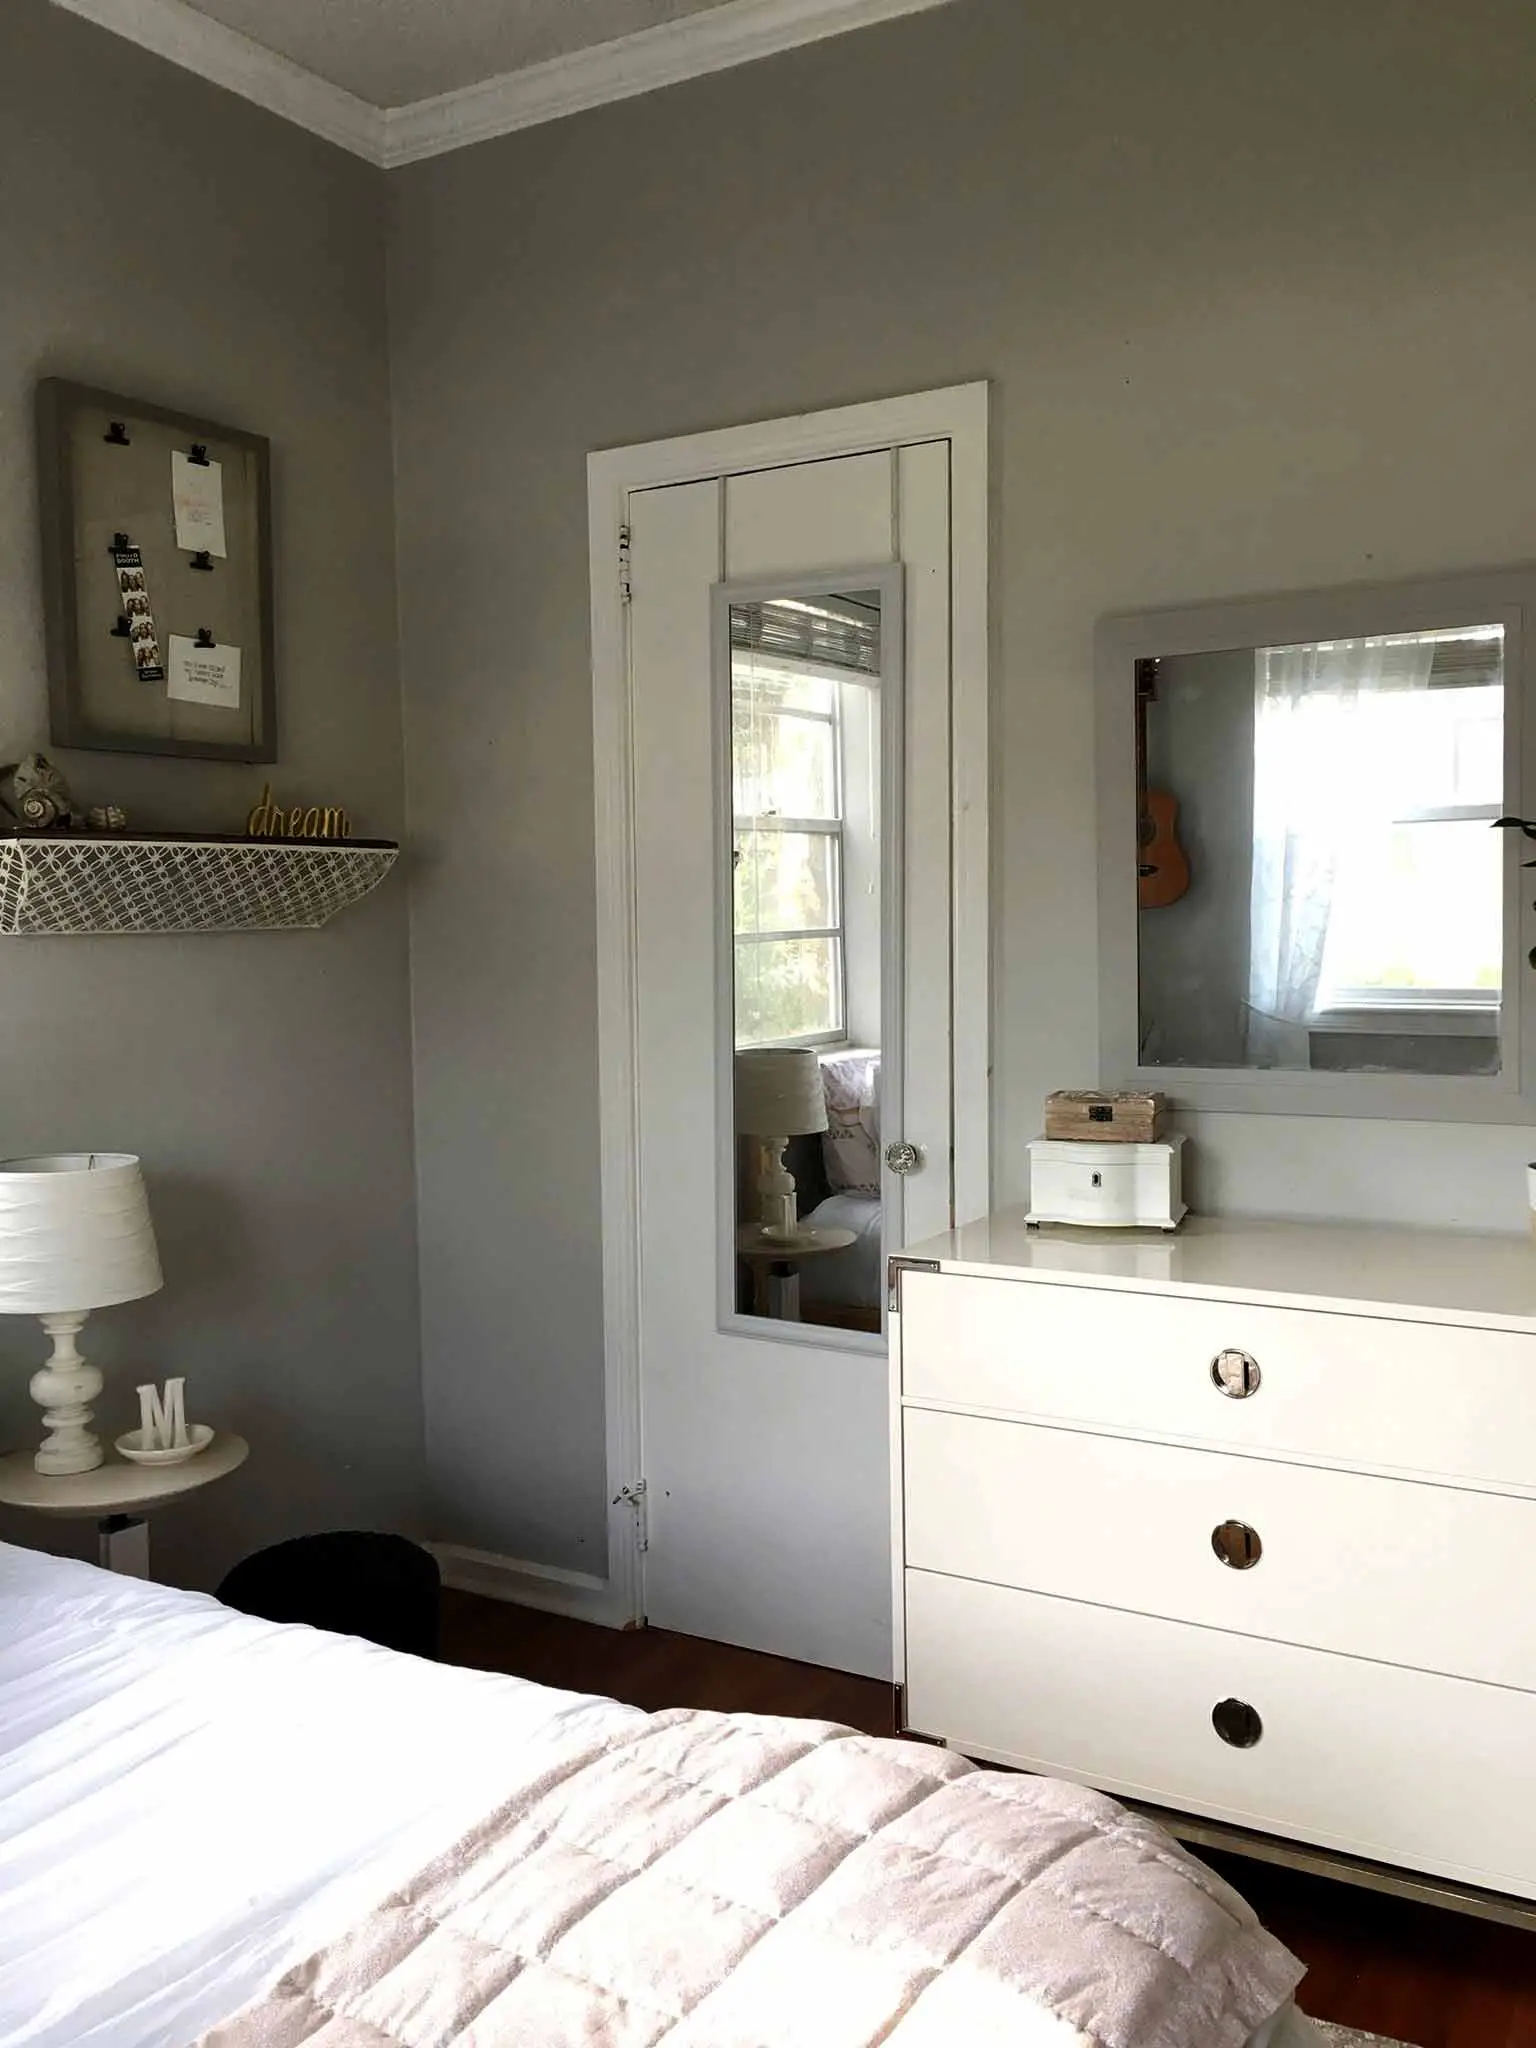 IKEA dresser with a mirror - modern boho tween bedroom - That Homebird Life Blog